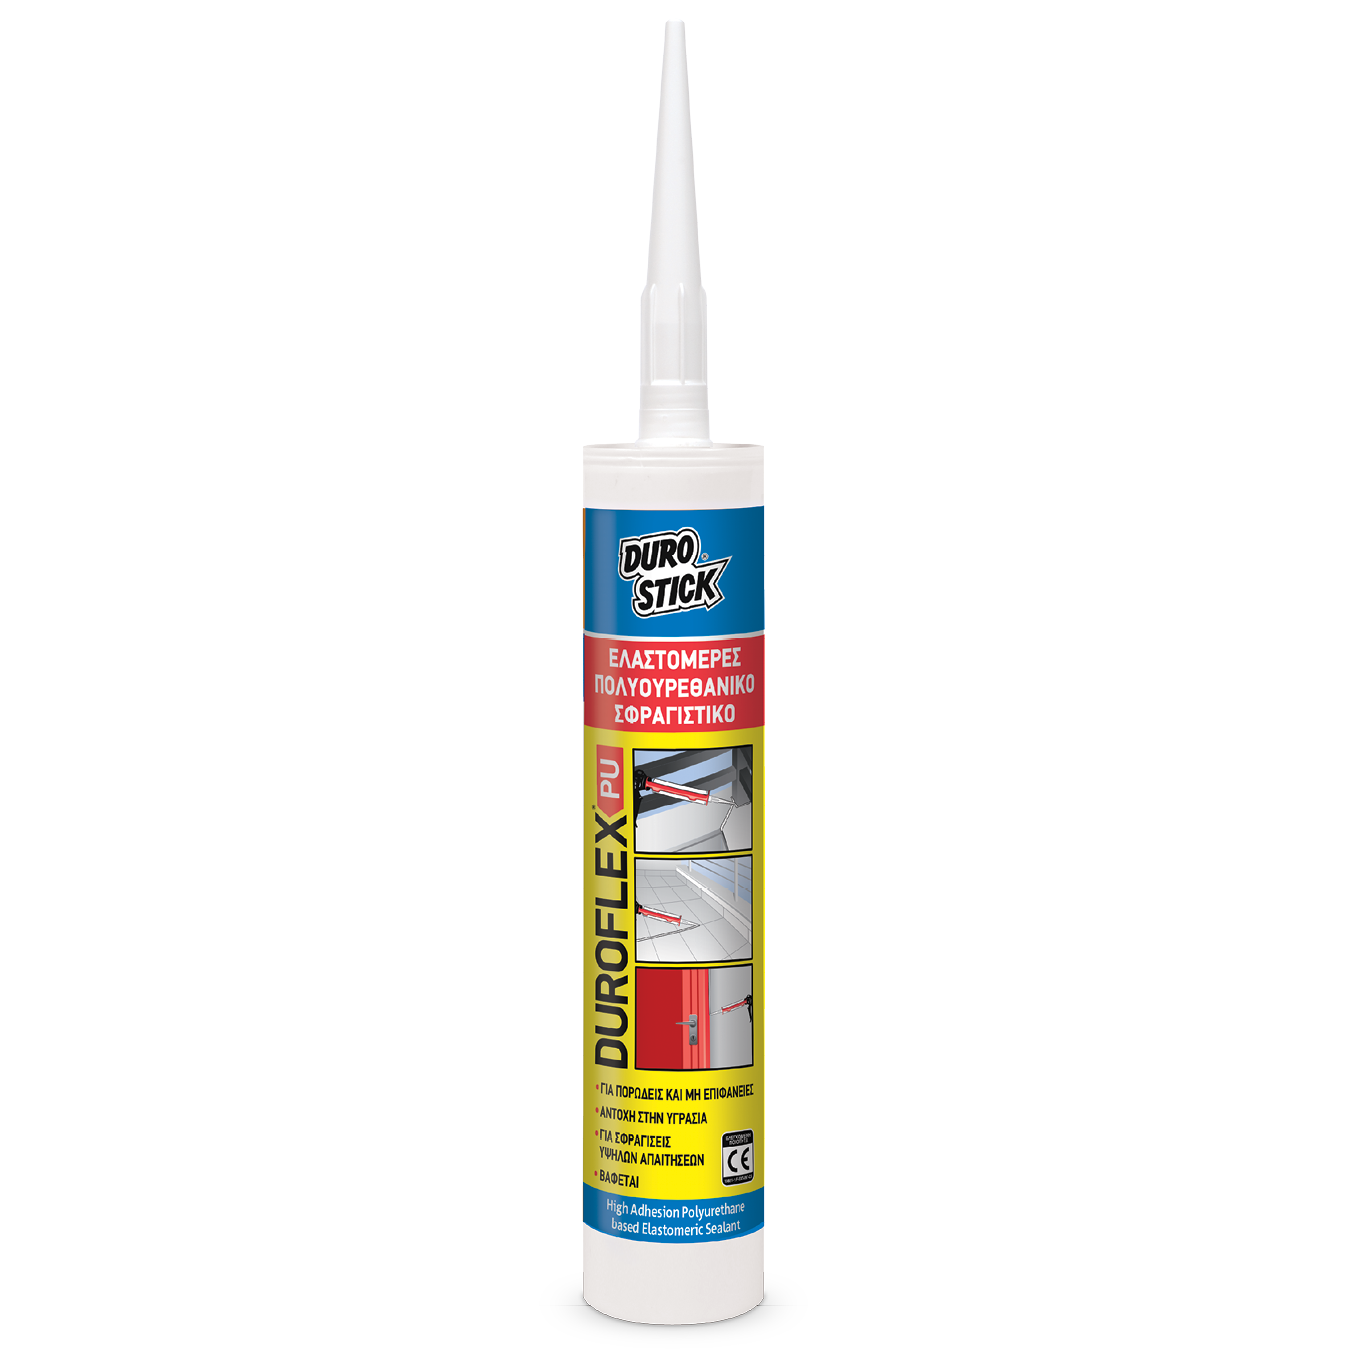 Duroflex-PU Ελαστομερές πολυουρεθανικό σφραγιστικό (μαστίχη) υψηλής πρόσφυσης